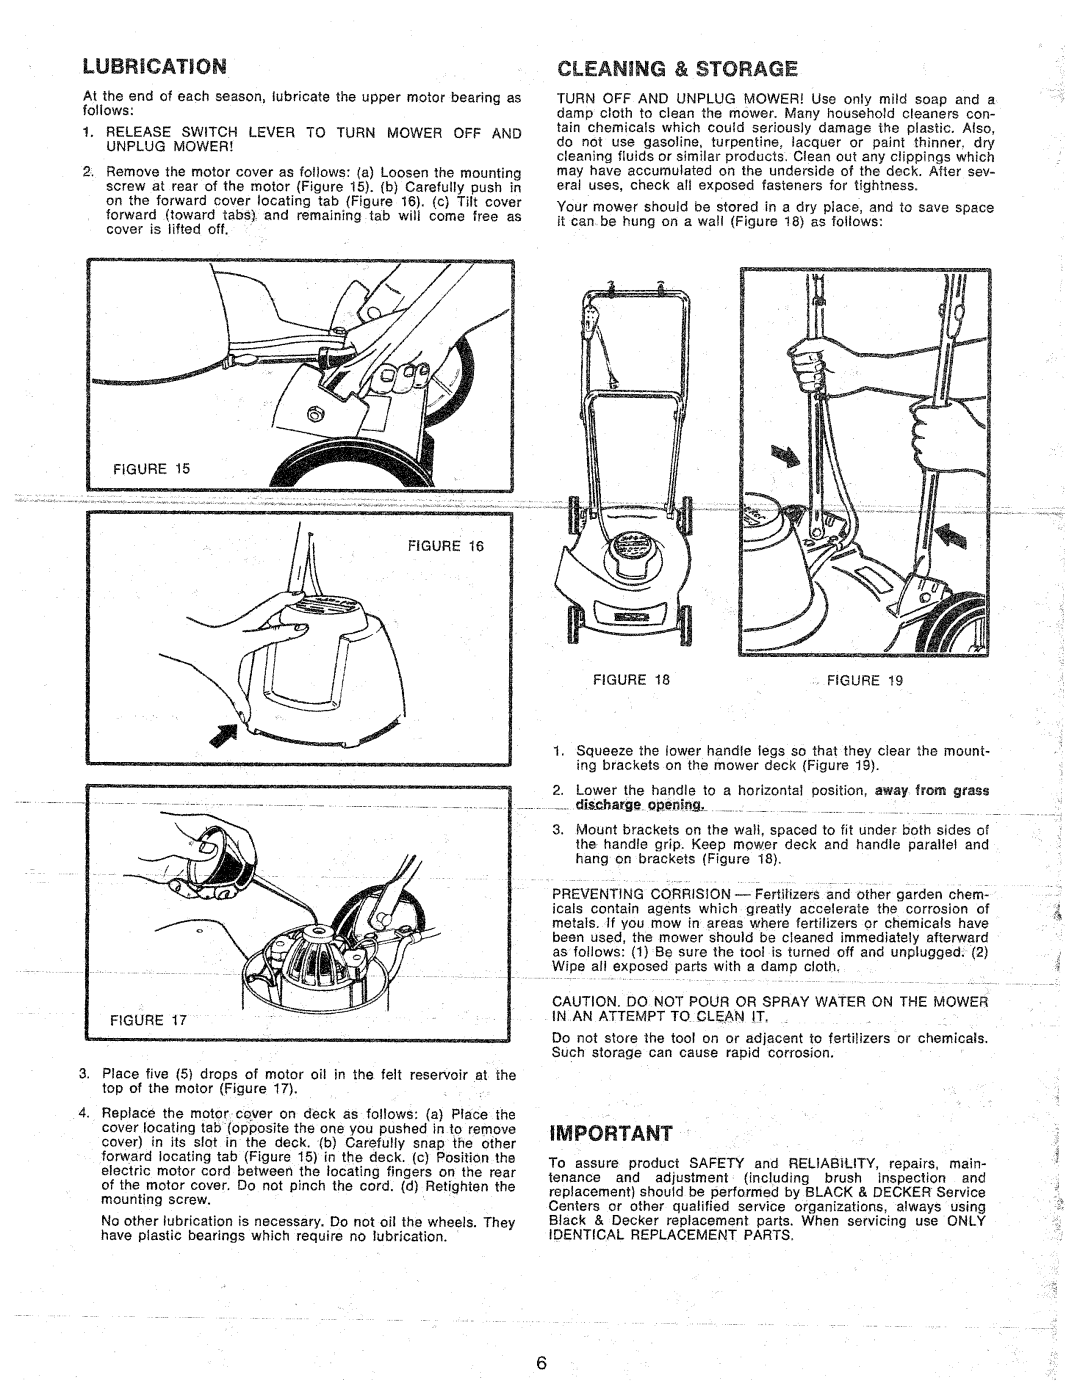 Black & Decker 8000 manual 